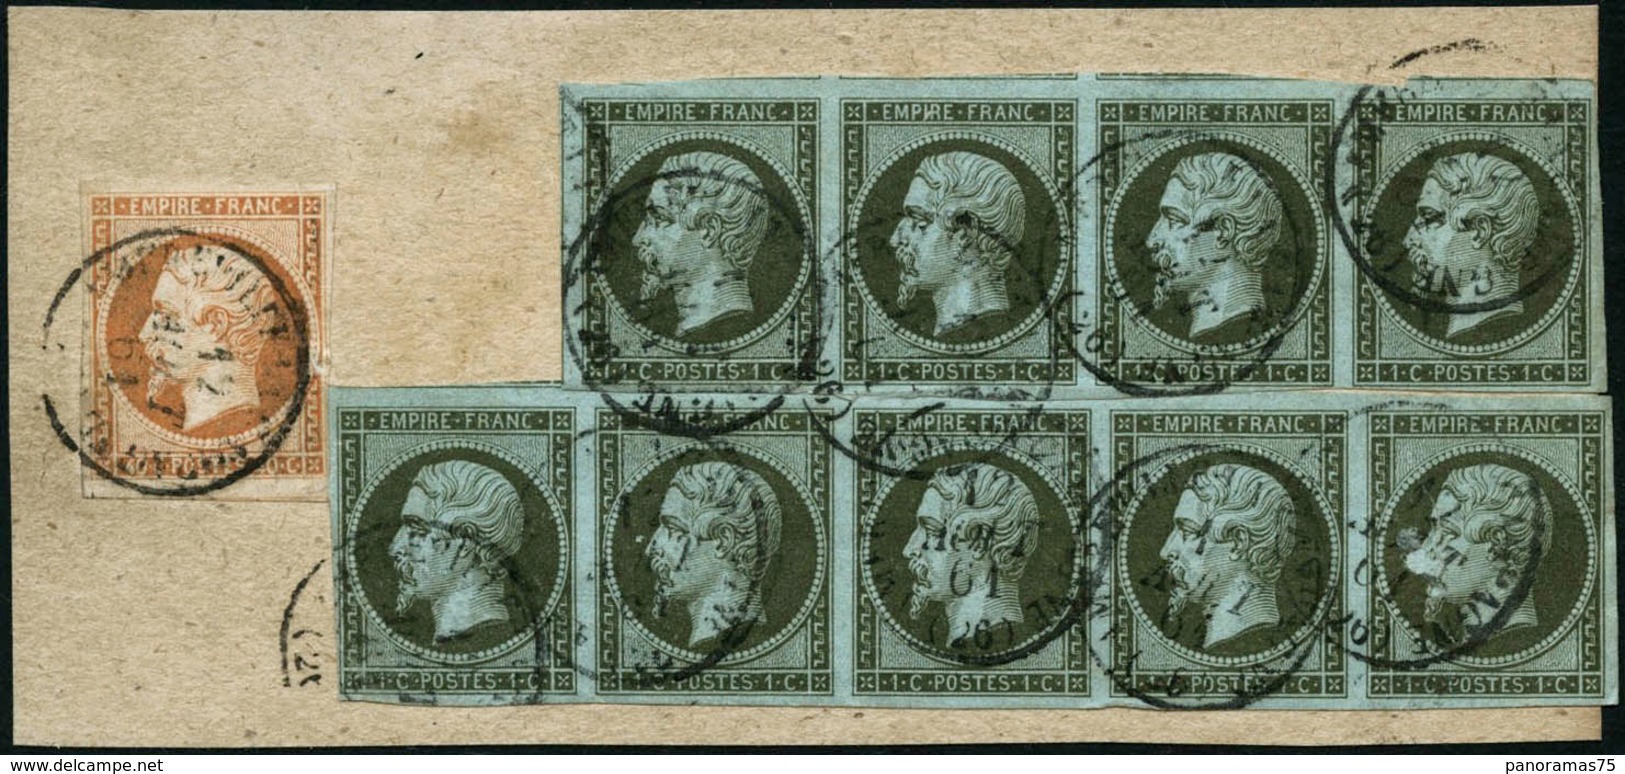 Oblit./fragment N°11 + 16 1c Vert-olive, Bande De 5 + Bande De 4 + 40c Orange S/fgt Obl CàD - TB - 1853-1860 Napoleone III